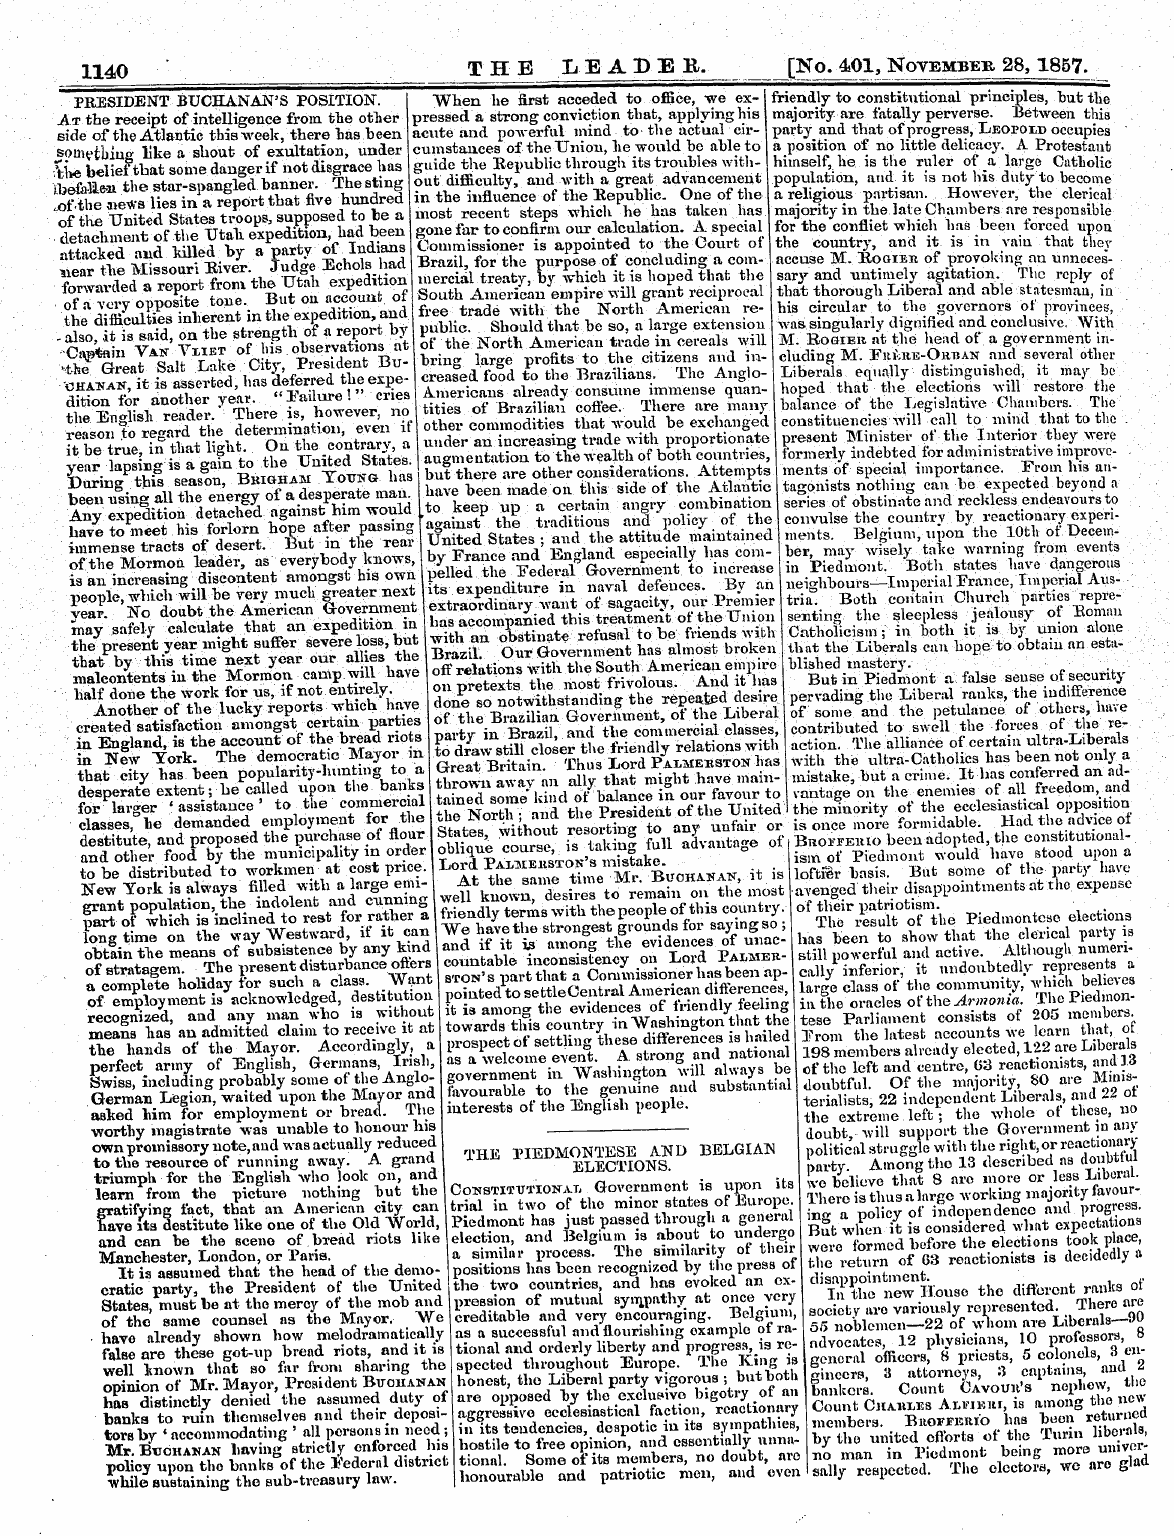 Leader (1850-1860): jS F Y, 2nd edition - X140 The Leader. [No. 401, November 28,1...